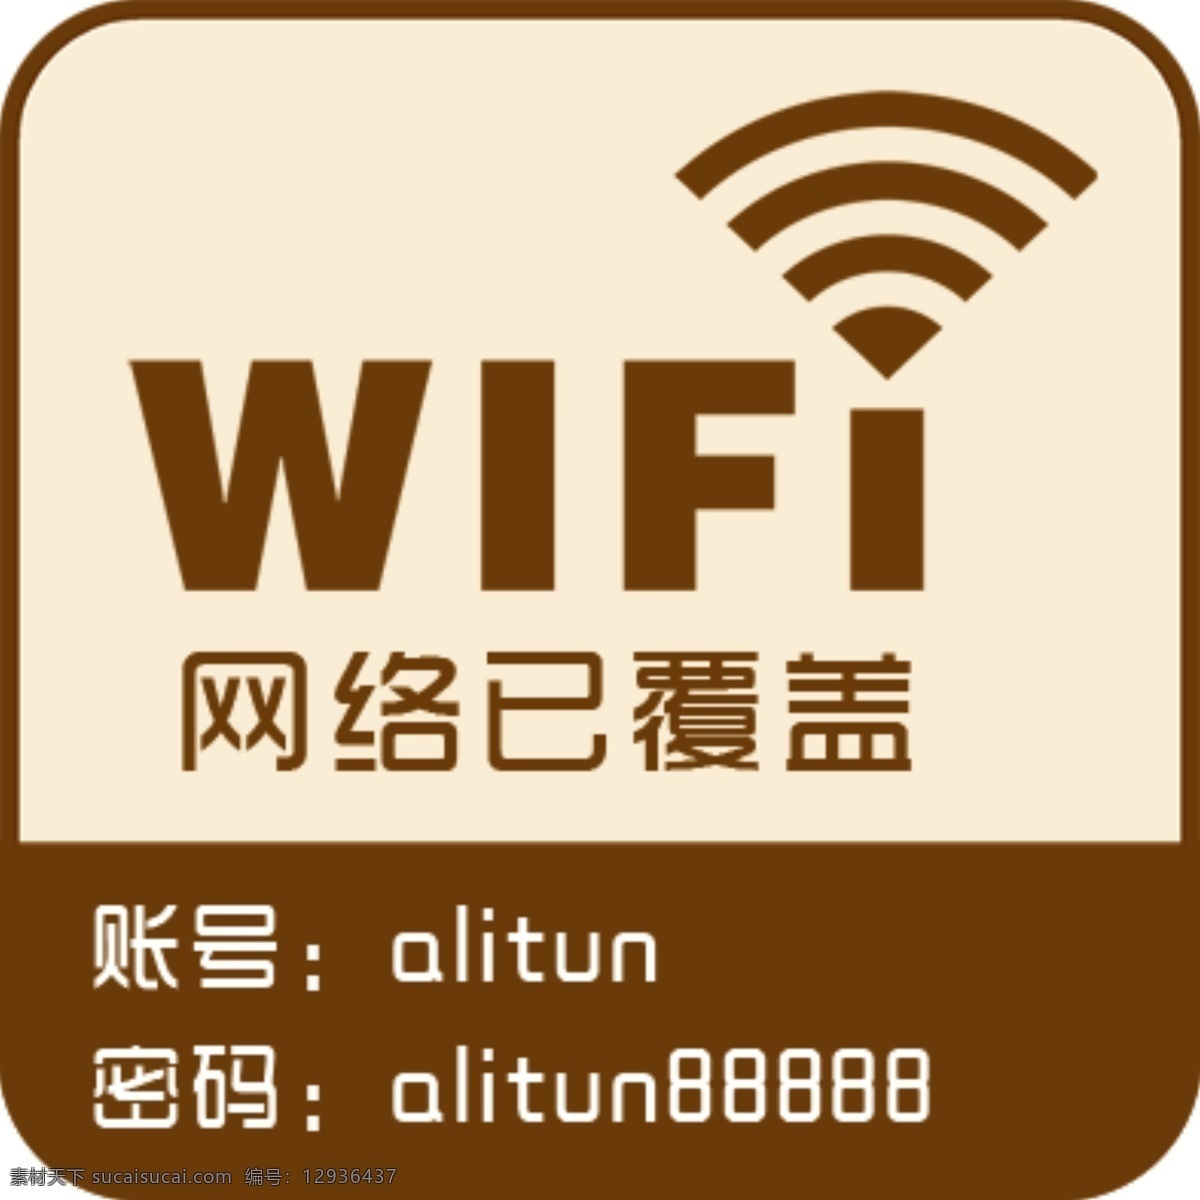 wifi 网络 覆盖 牌 网络覆盖牌 棕色背景 账号 密码